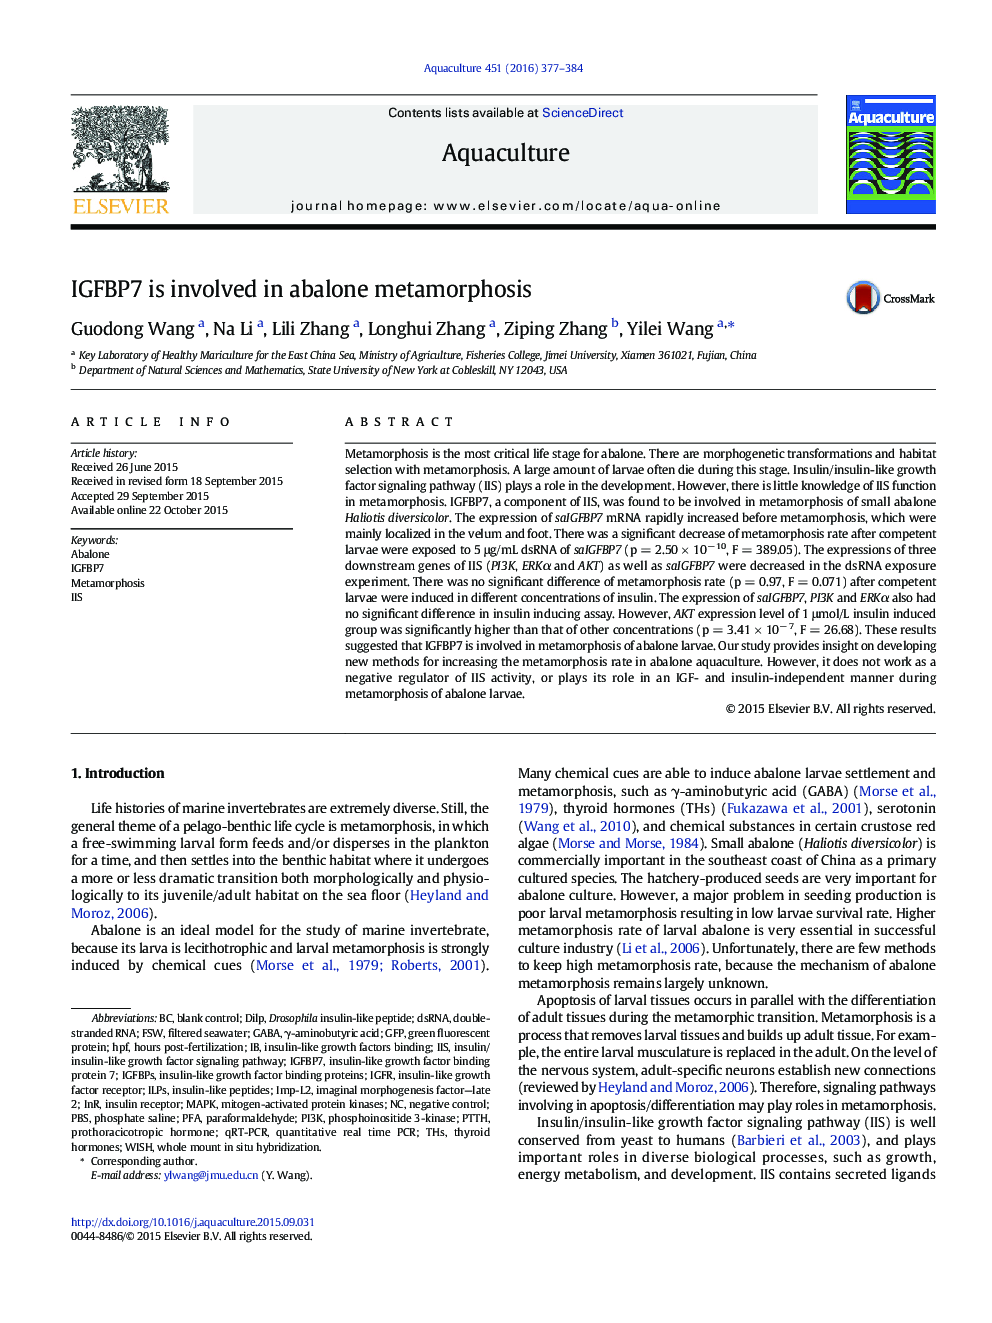 IGFBP7 is involved in abalone metamorphosis